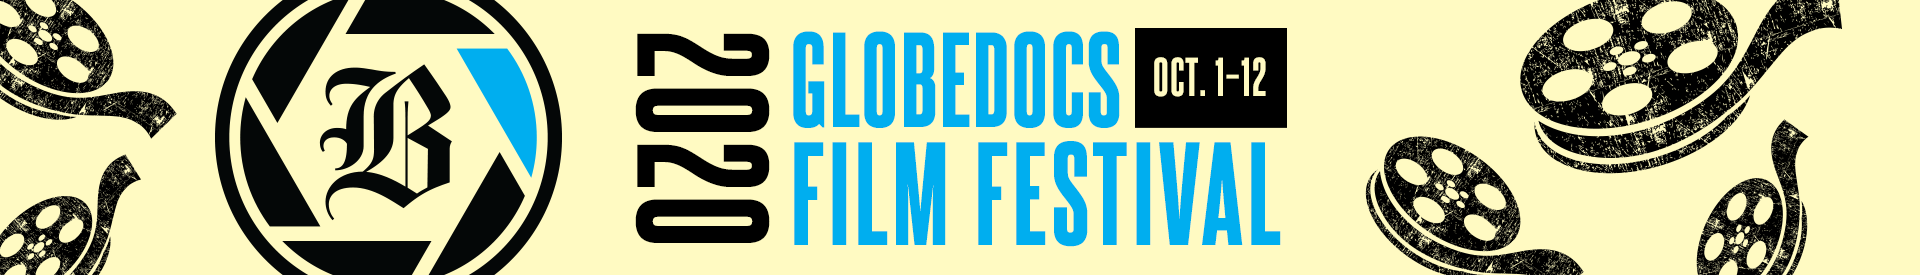 GlobeDocs Film Festival 2020